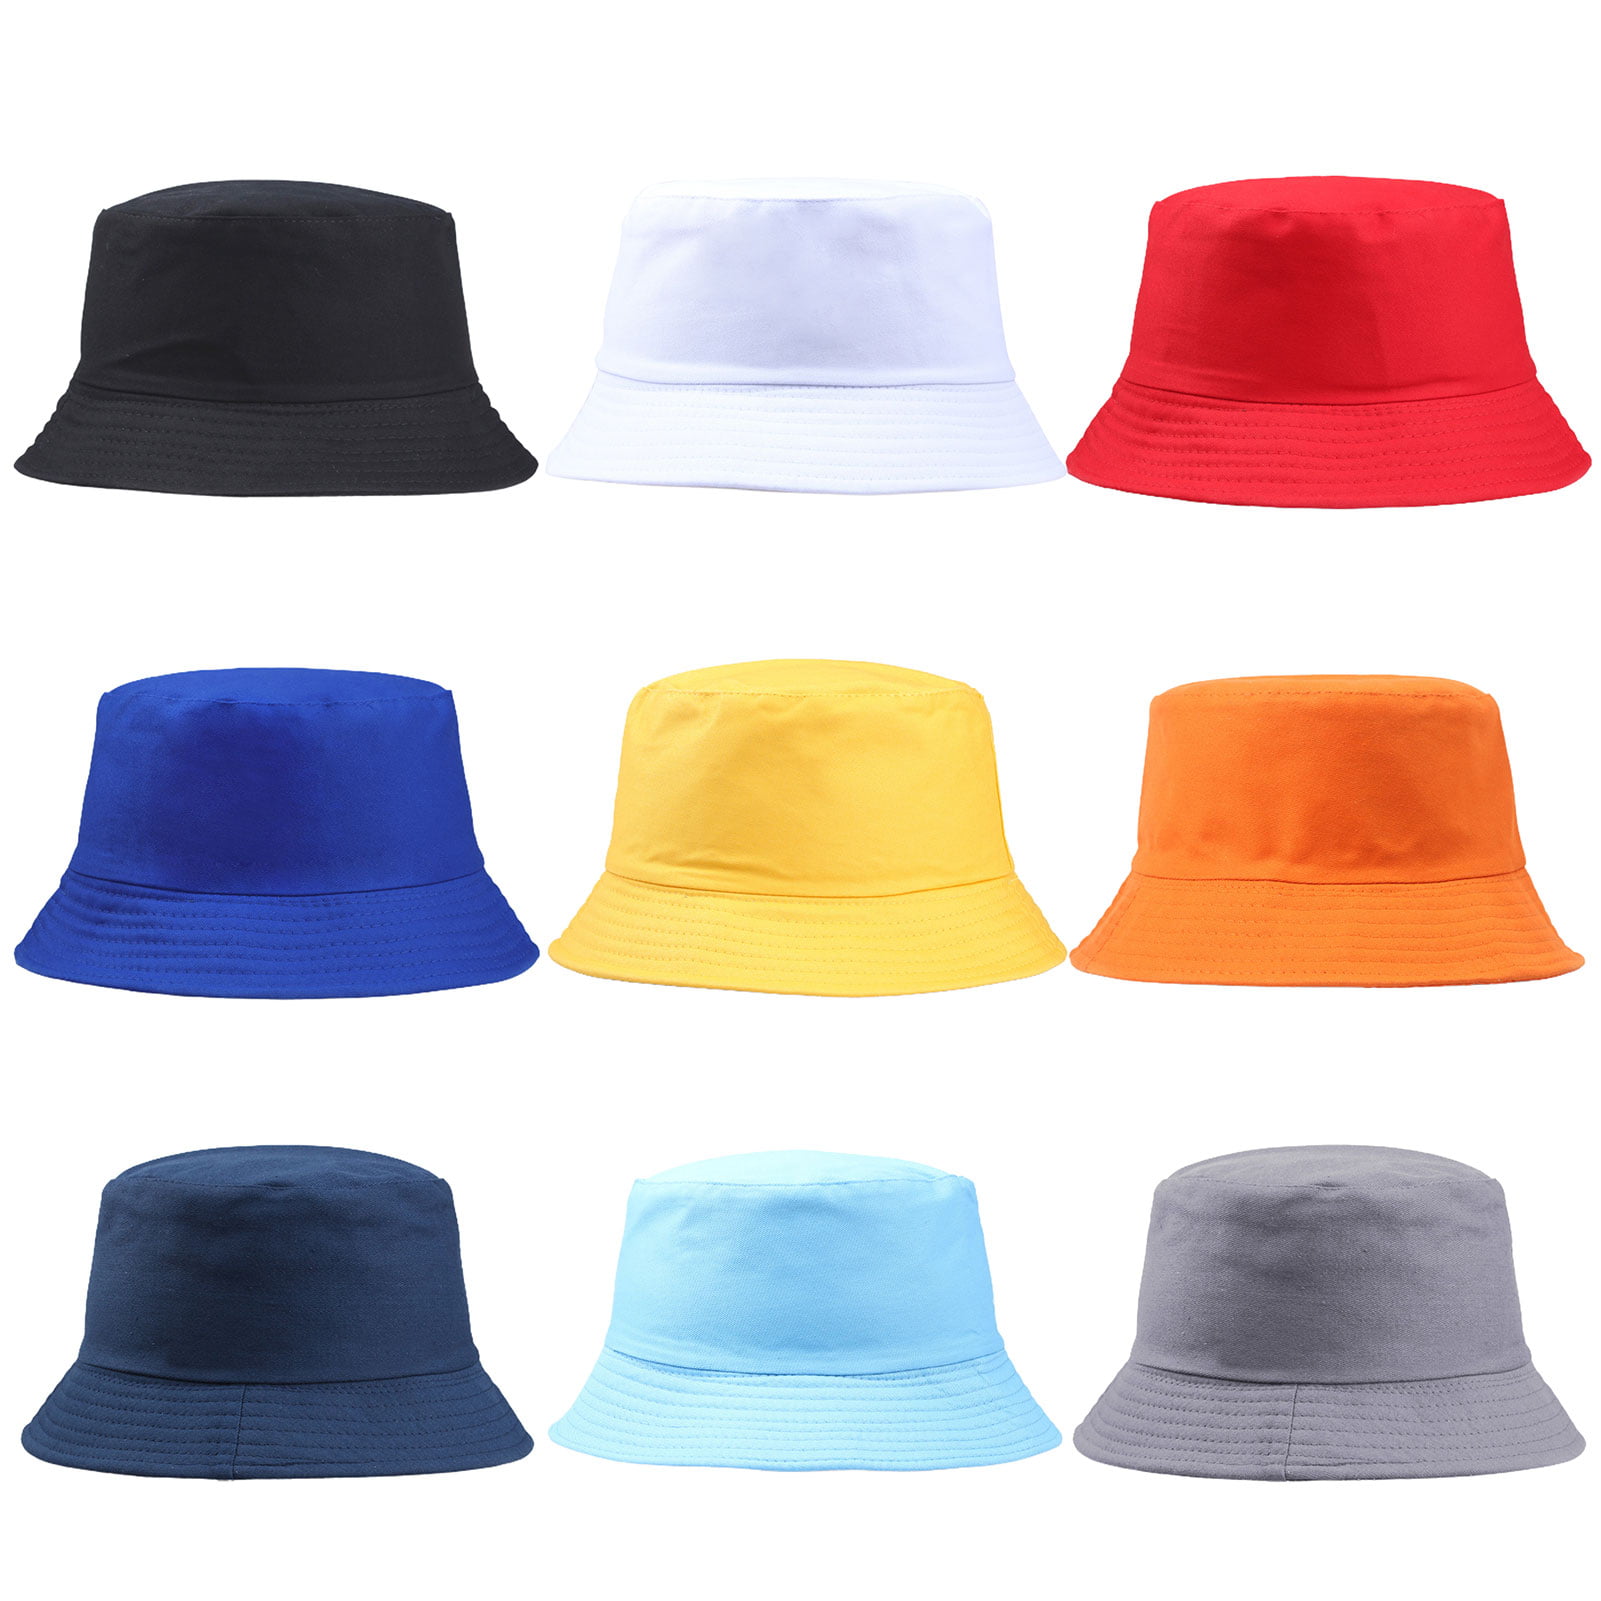 SANWOOD Bucket Hat Navy Blue,Unisex Cotton Fisherman Hat Solid Color Beach  Outdoor Sunshade Hip Hop Basin Cap